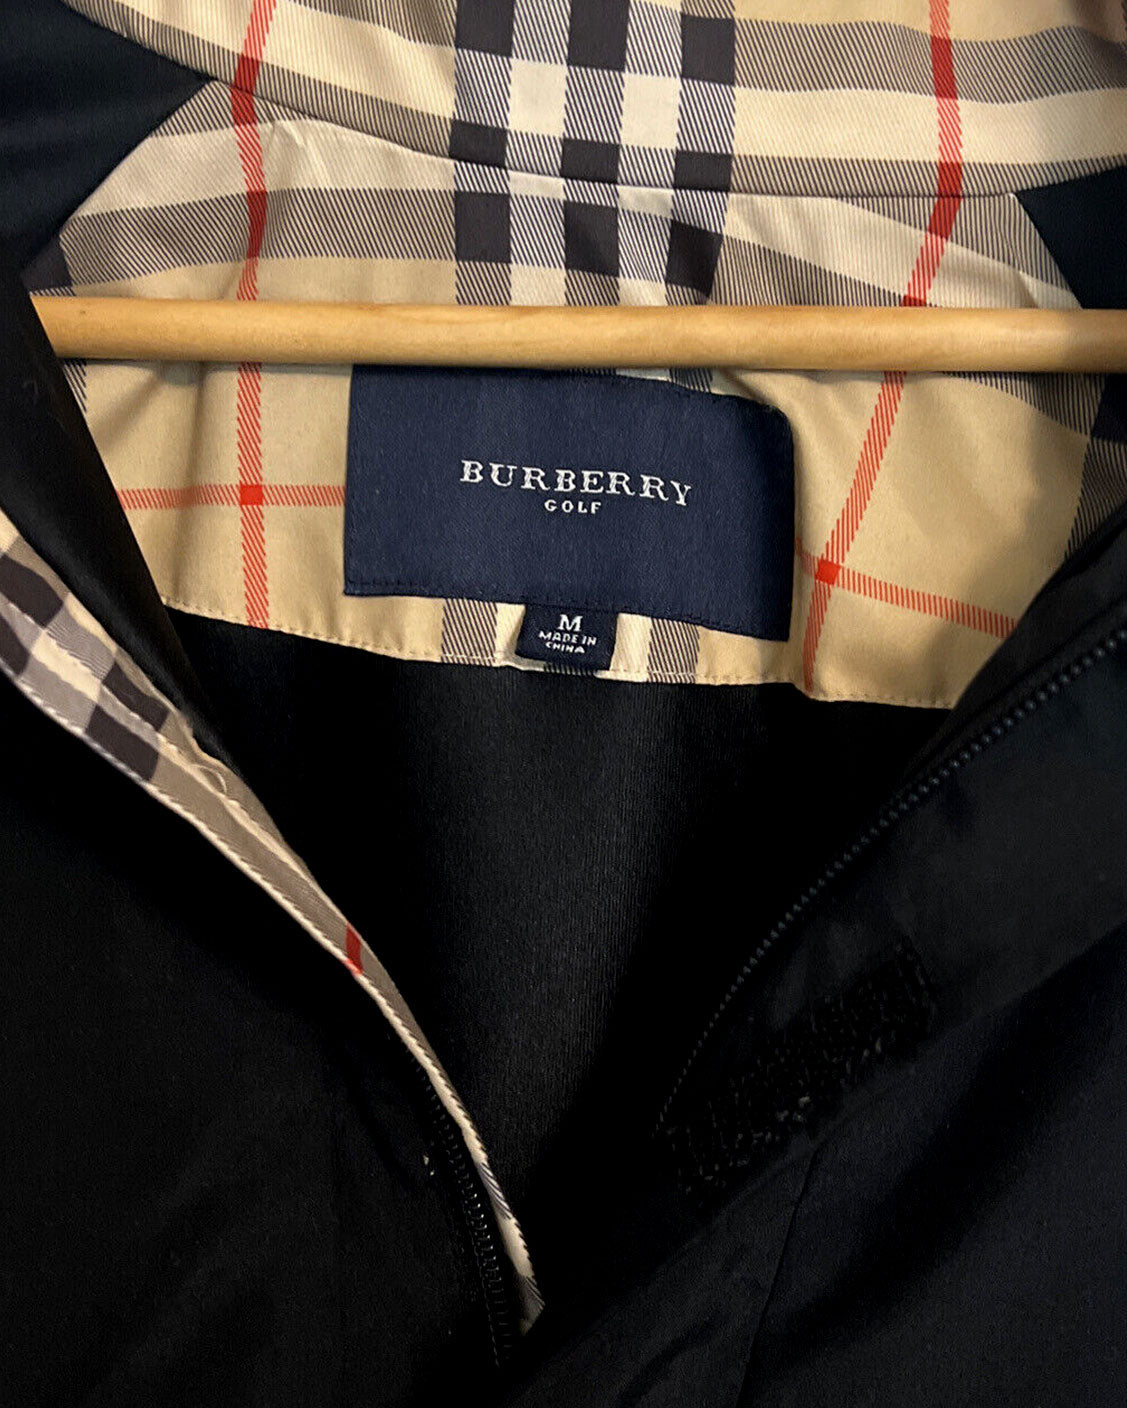 Burberry Golf Windbreaker Jacket